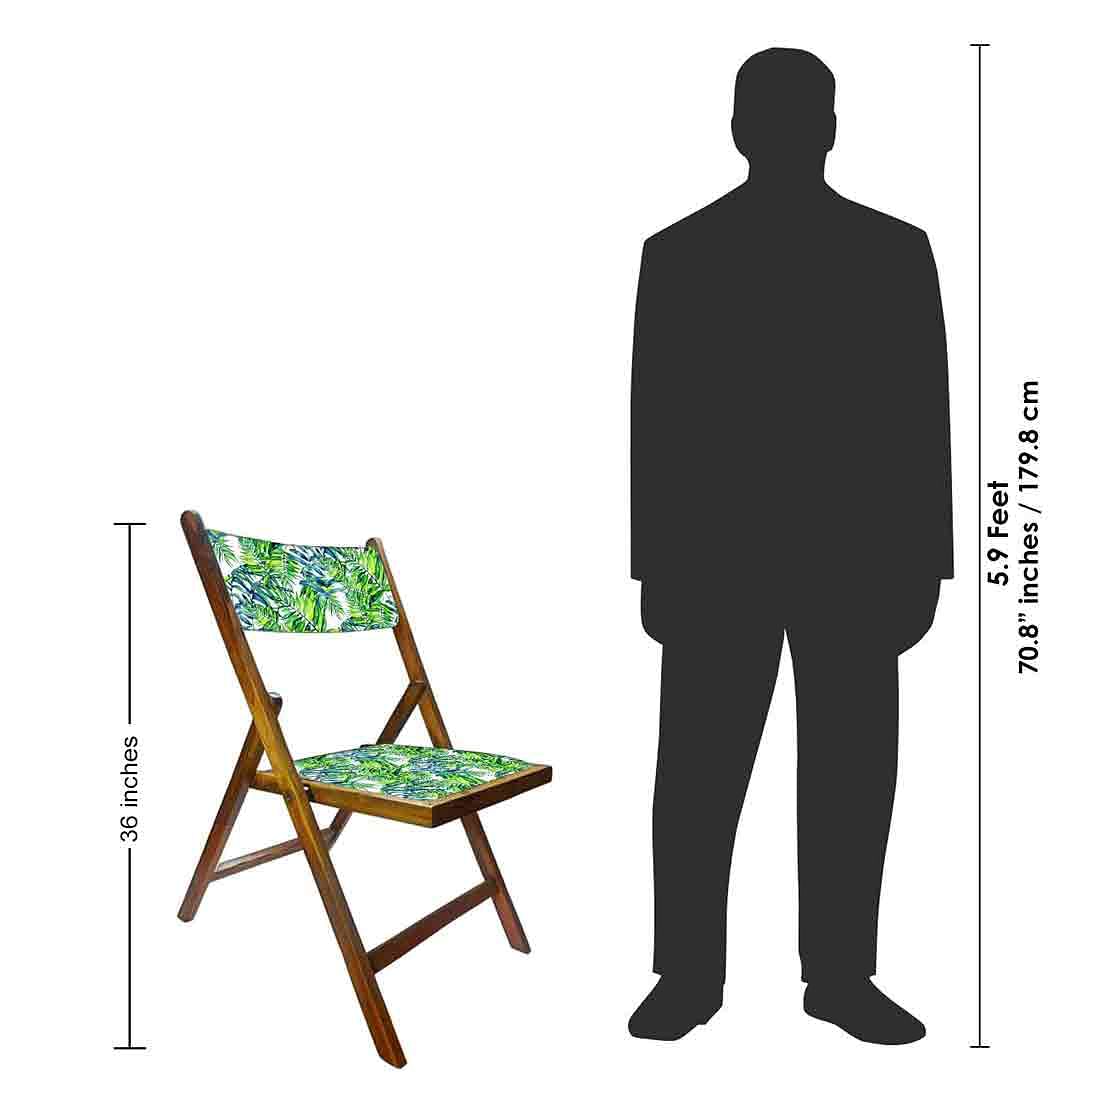 Nutcase Designer Chairs For Living Room - Green Blue Leaves Nutcase